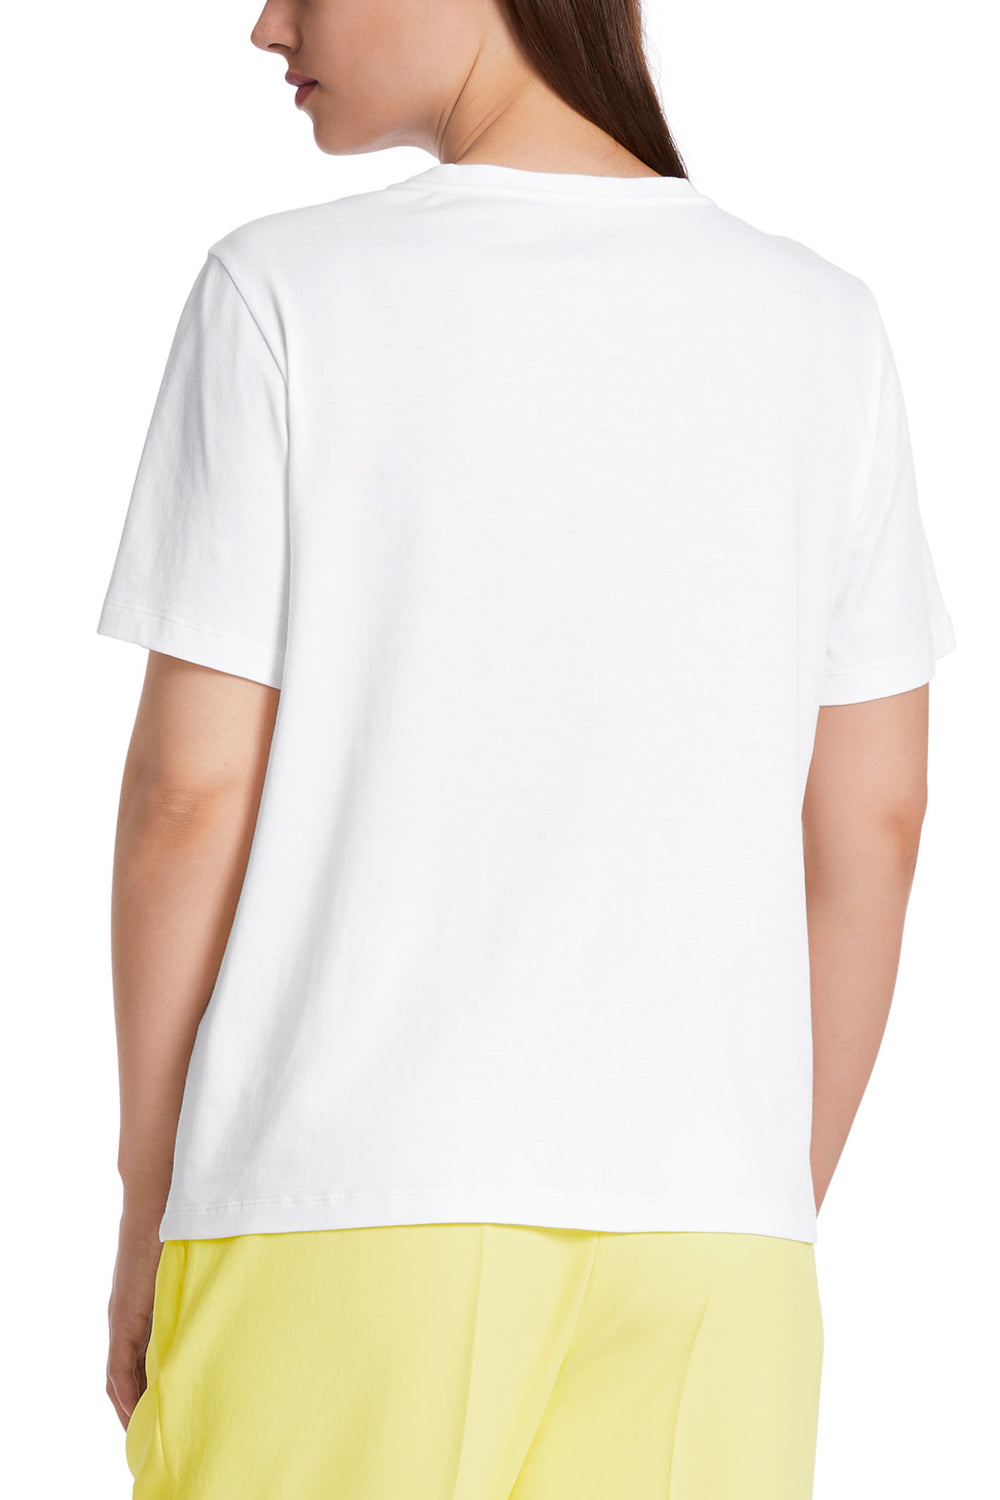 Marc Cain Collection WC 48.11 J40 White Lime Print T-Shirt - Olivia Grace Fashion